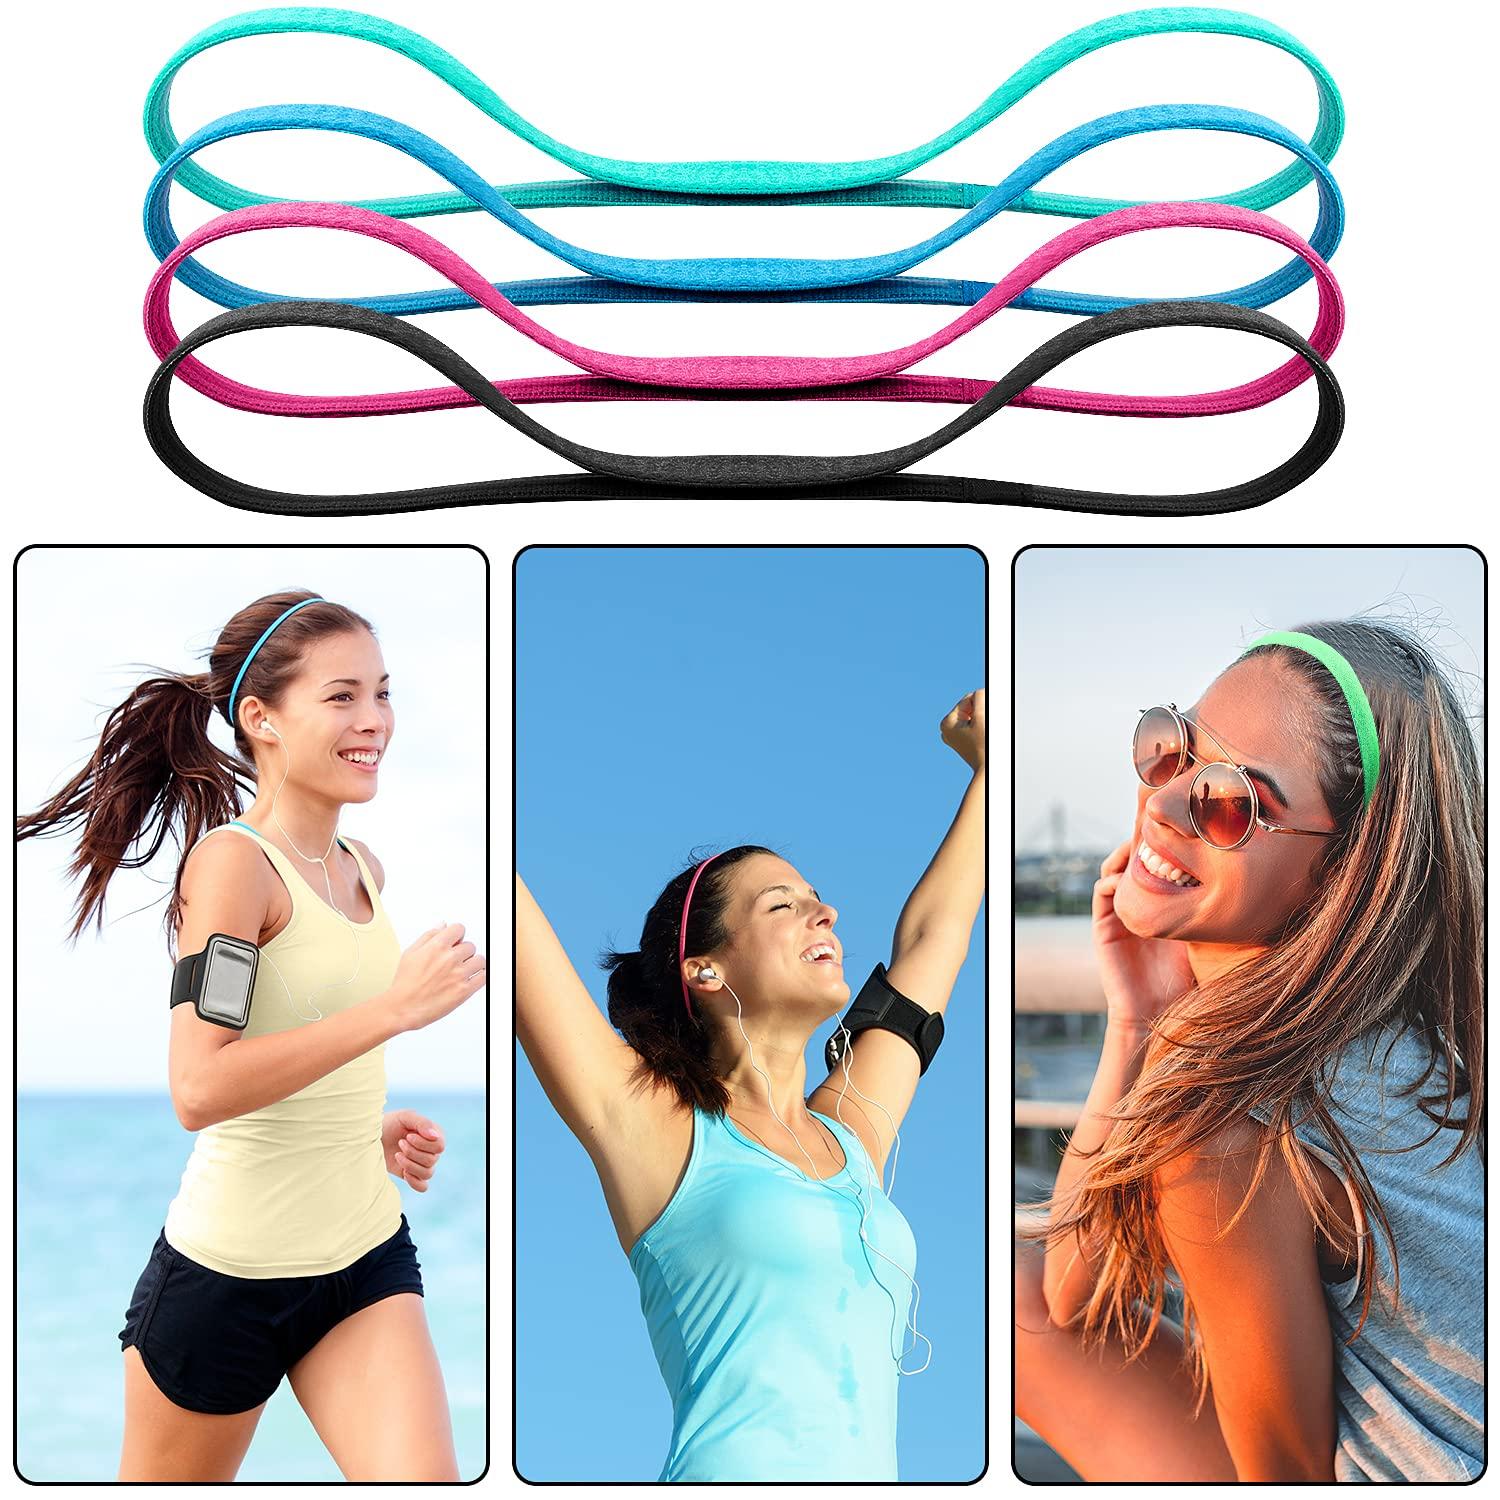  Thin Elastic Headbands for Women - Athletic Headbands